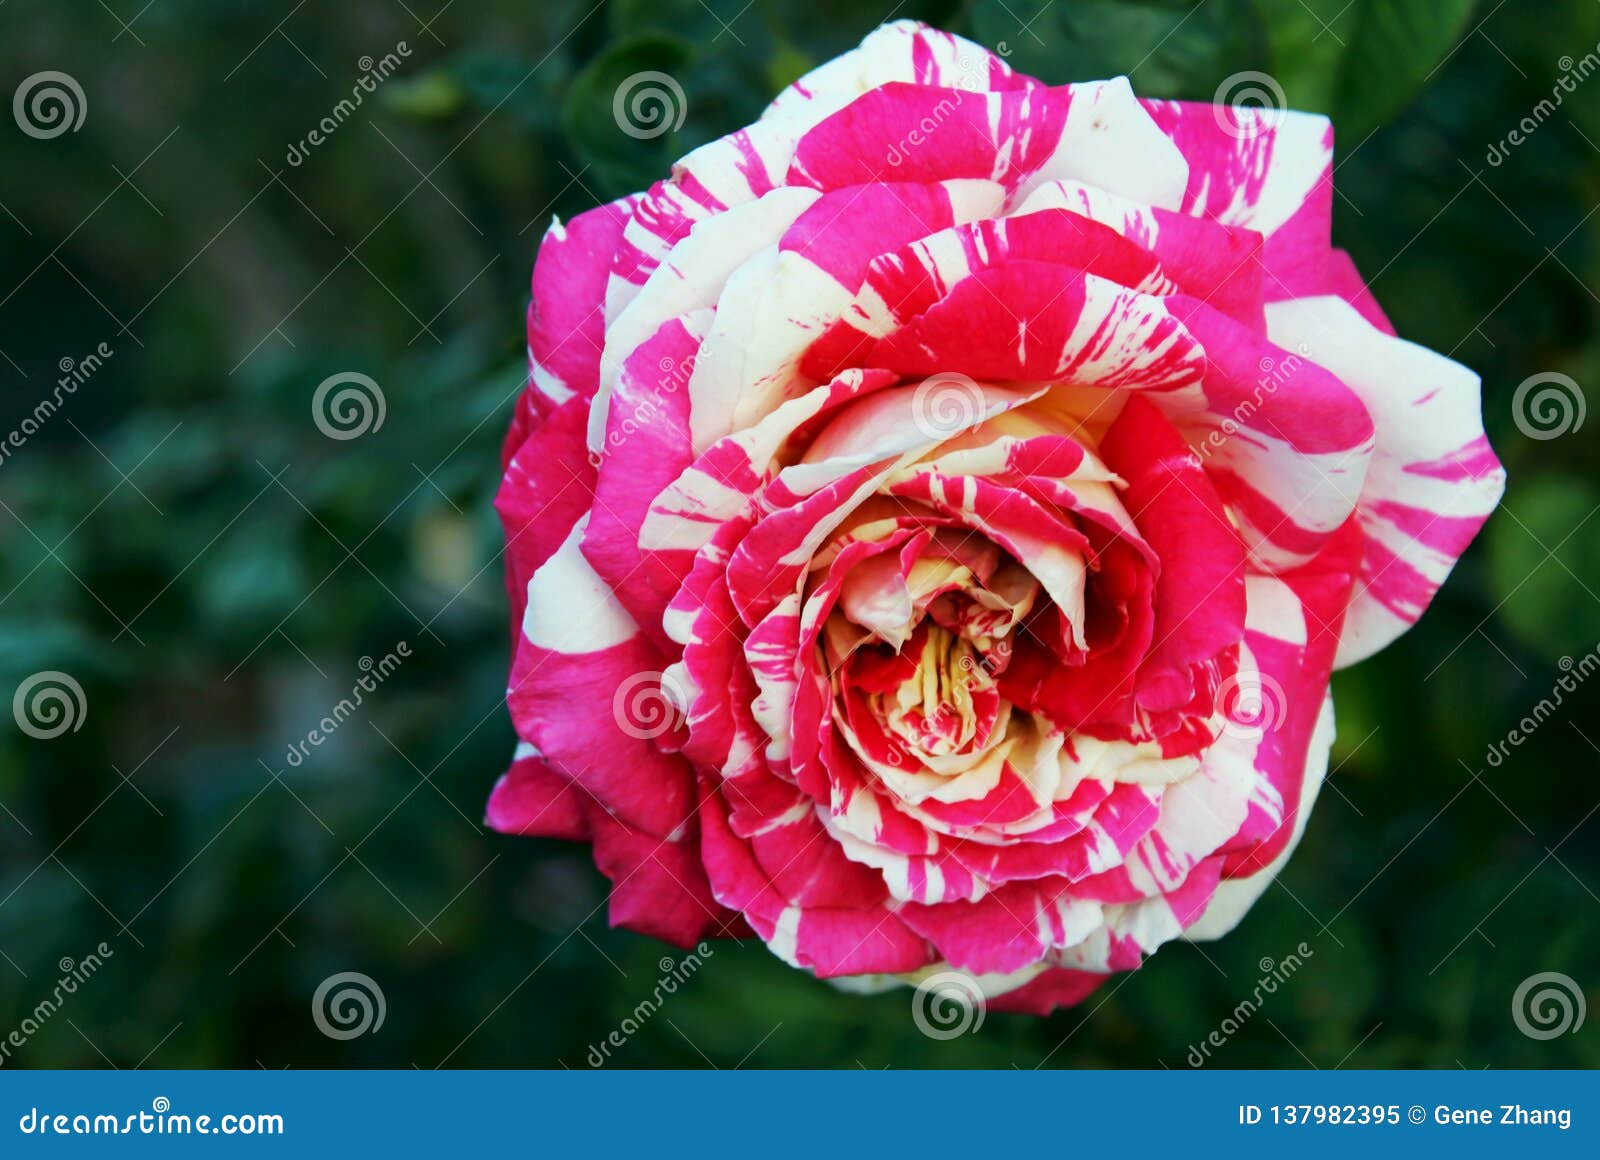 neil diamond rose, hybrid tea rose